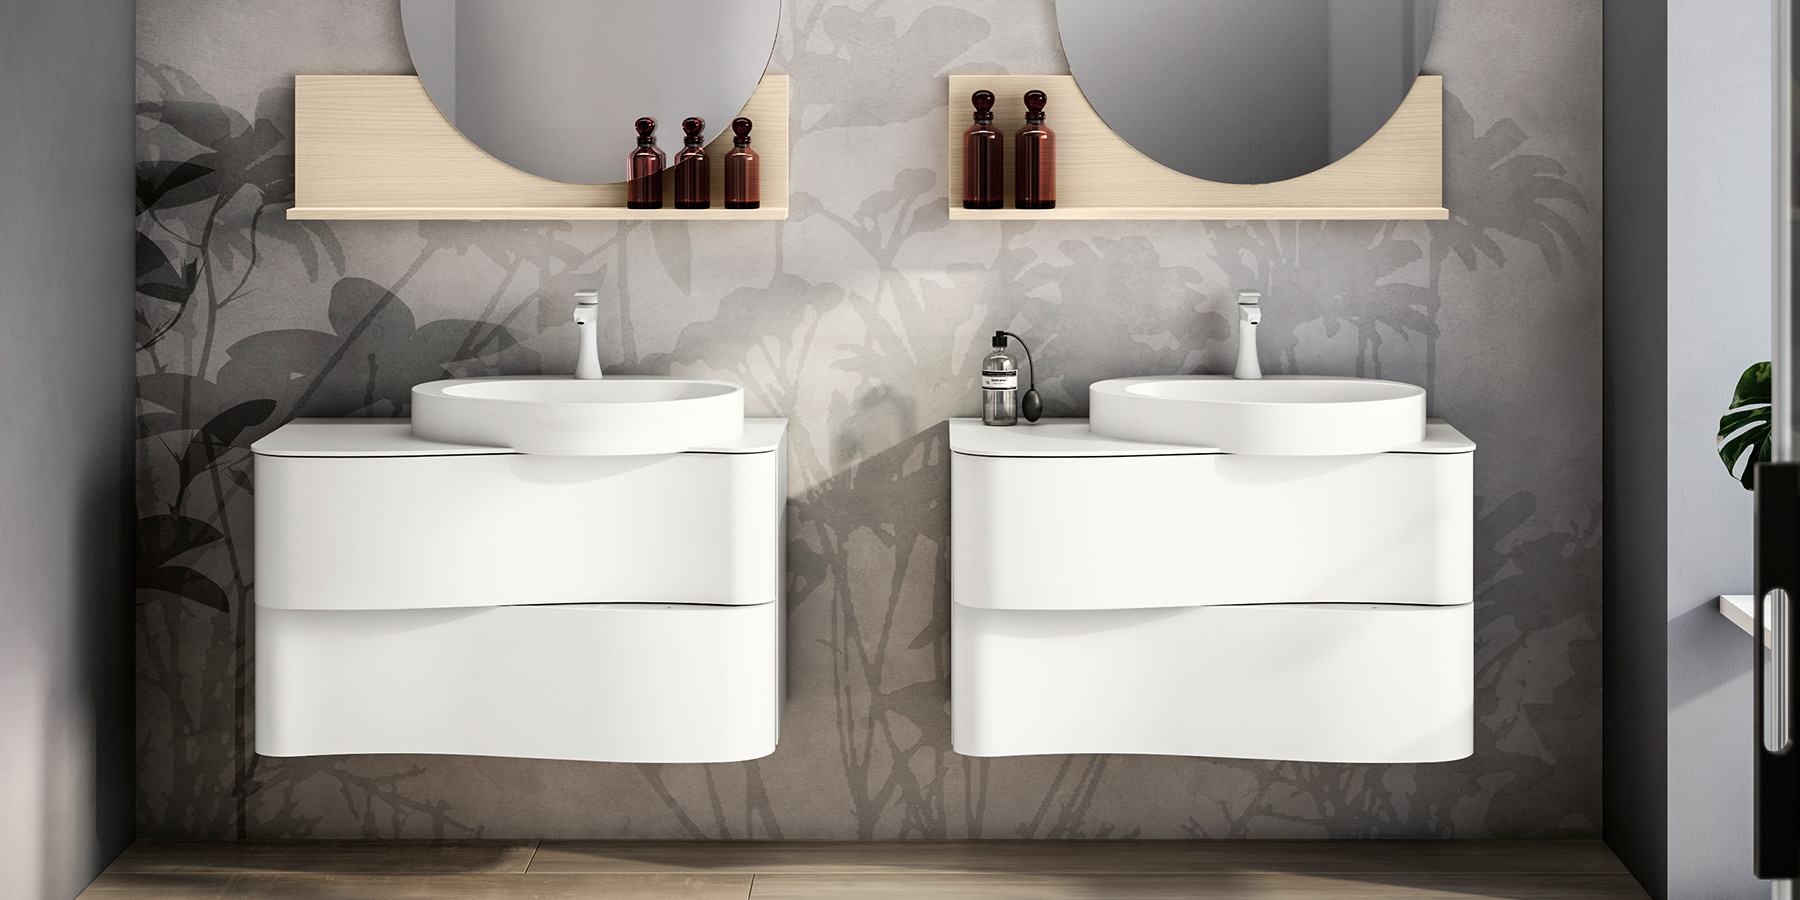 Onda Modern Bathroom Vanity in white